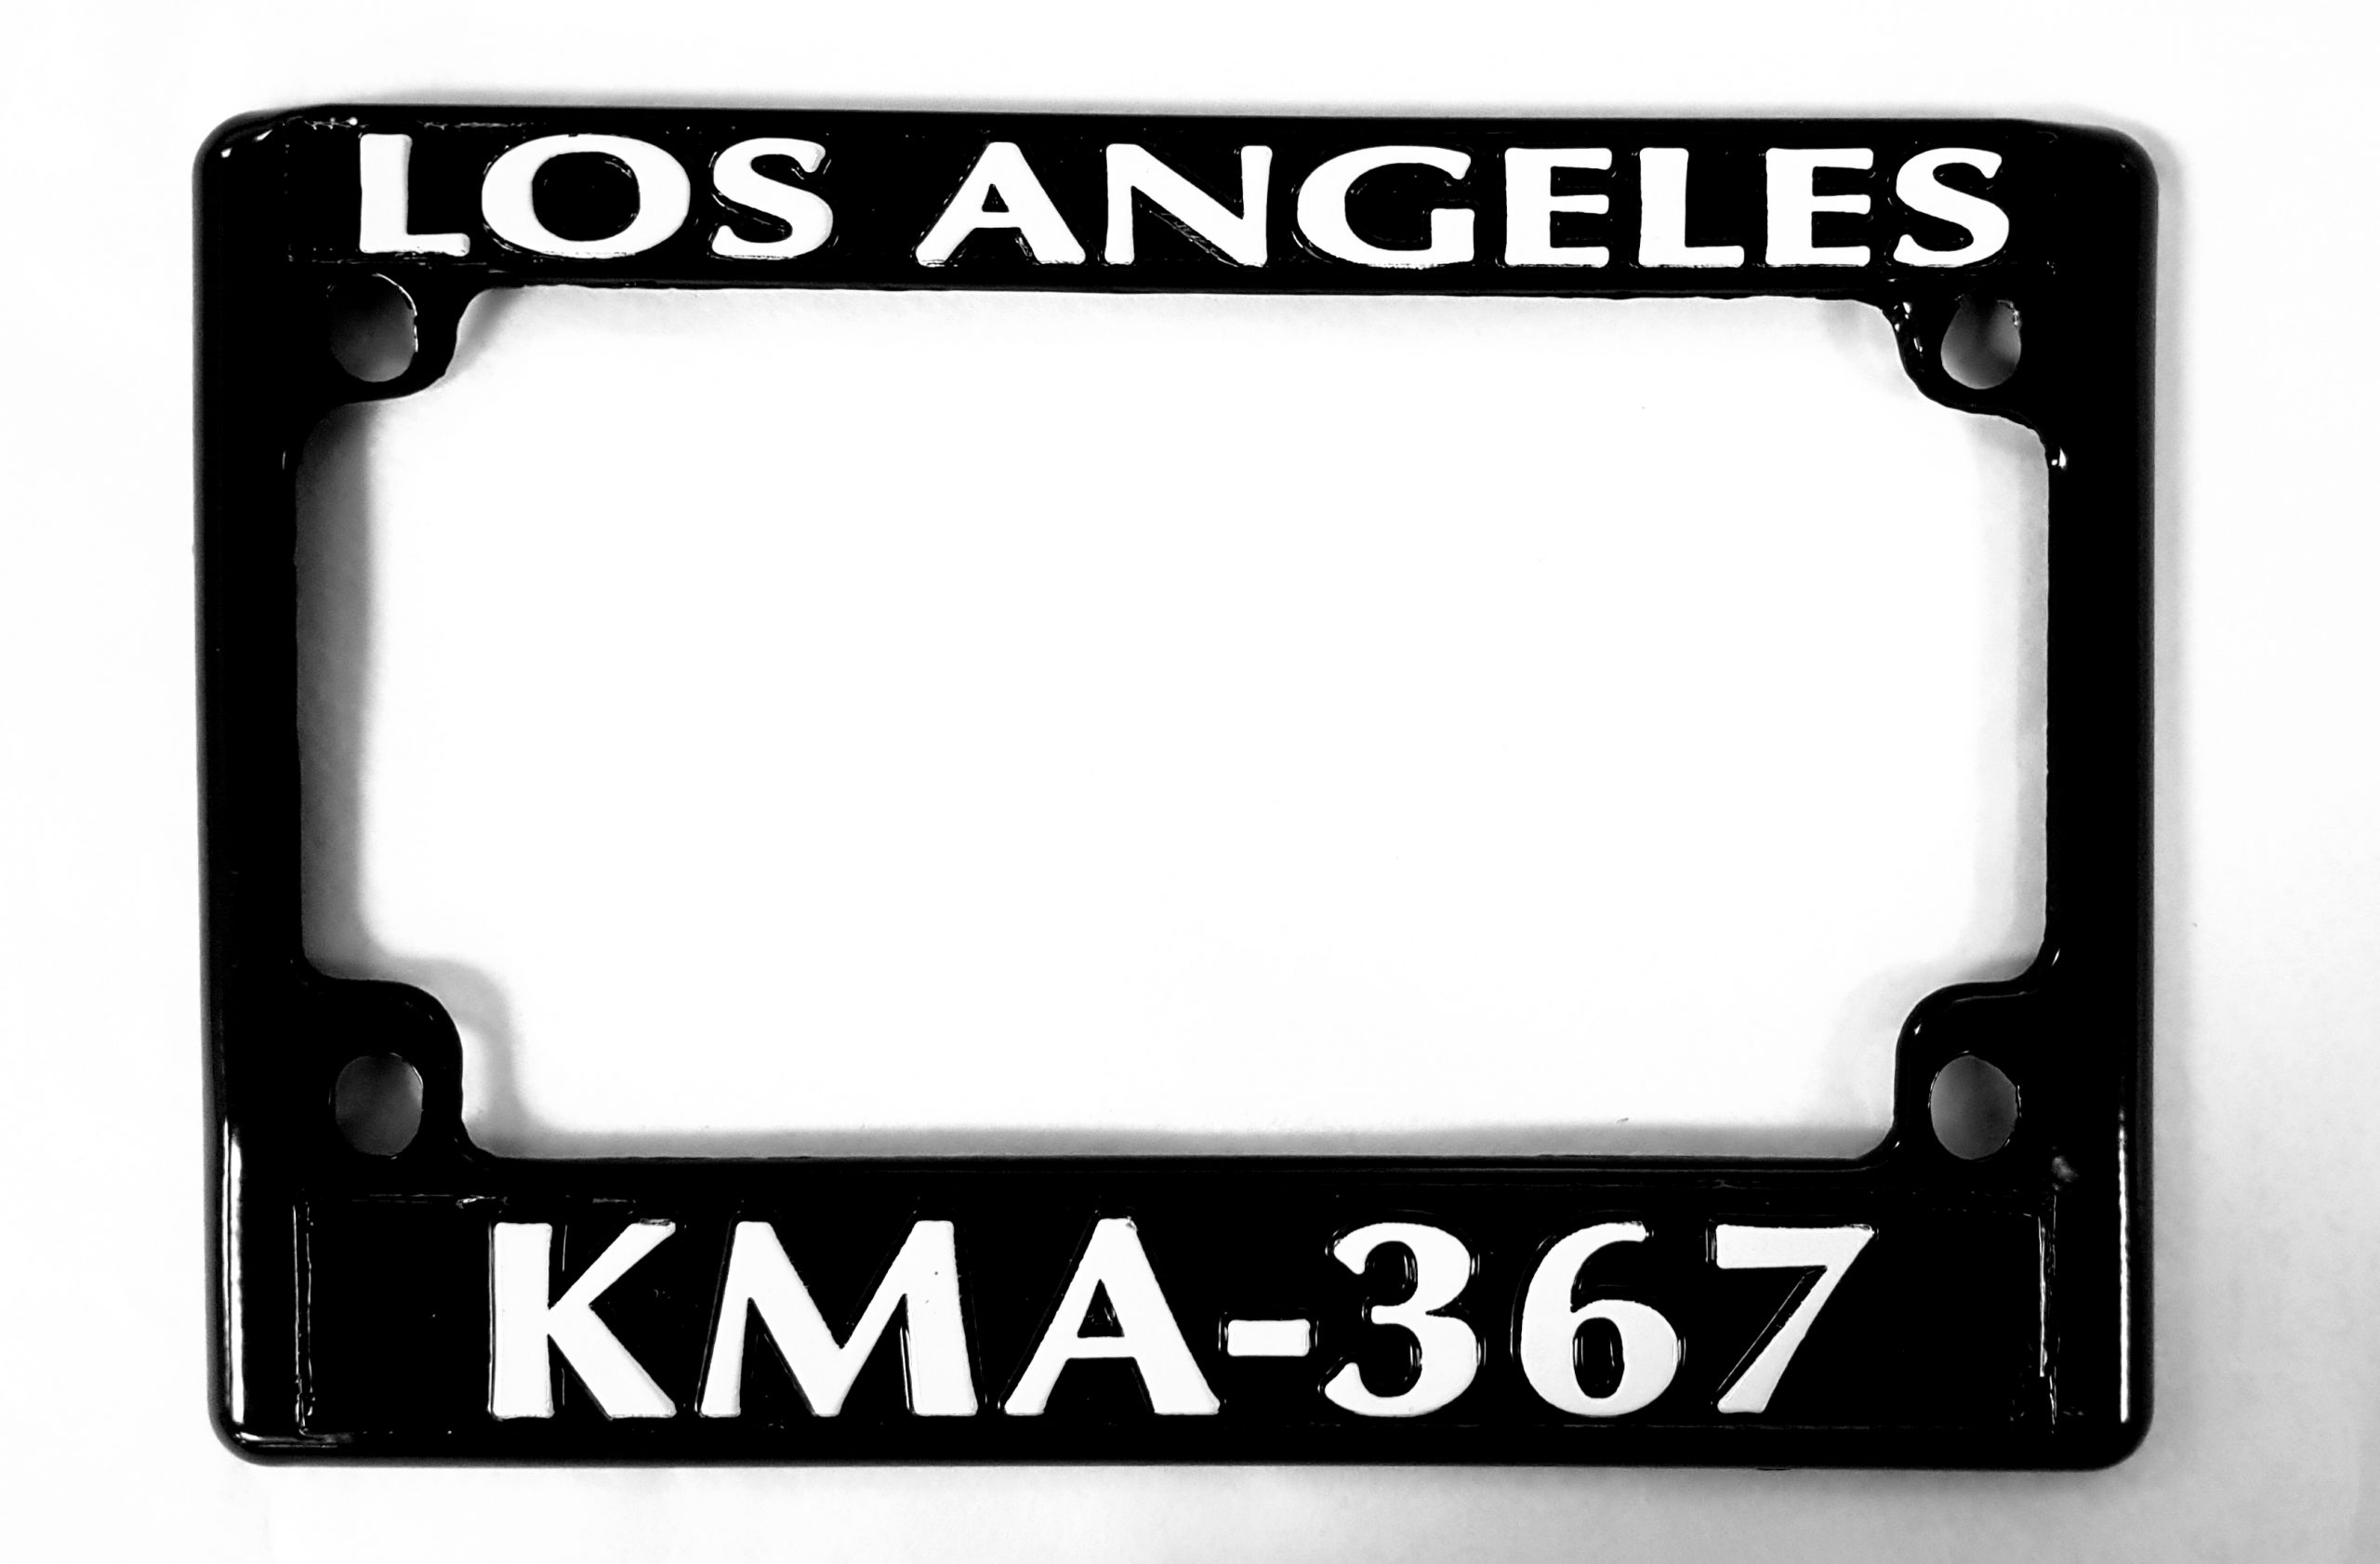 LOS ANGELES POLICE KMA-367 CAR  LICENSE PLATE FRAME 